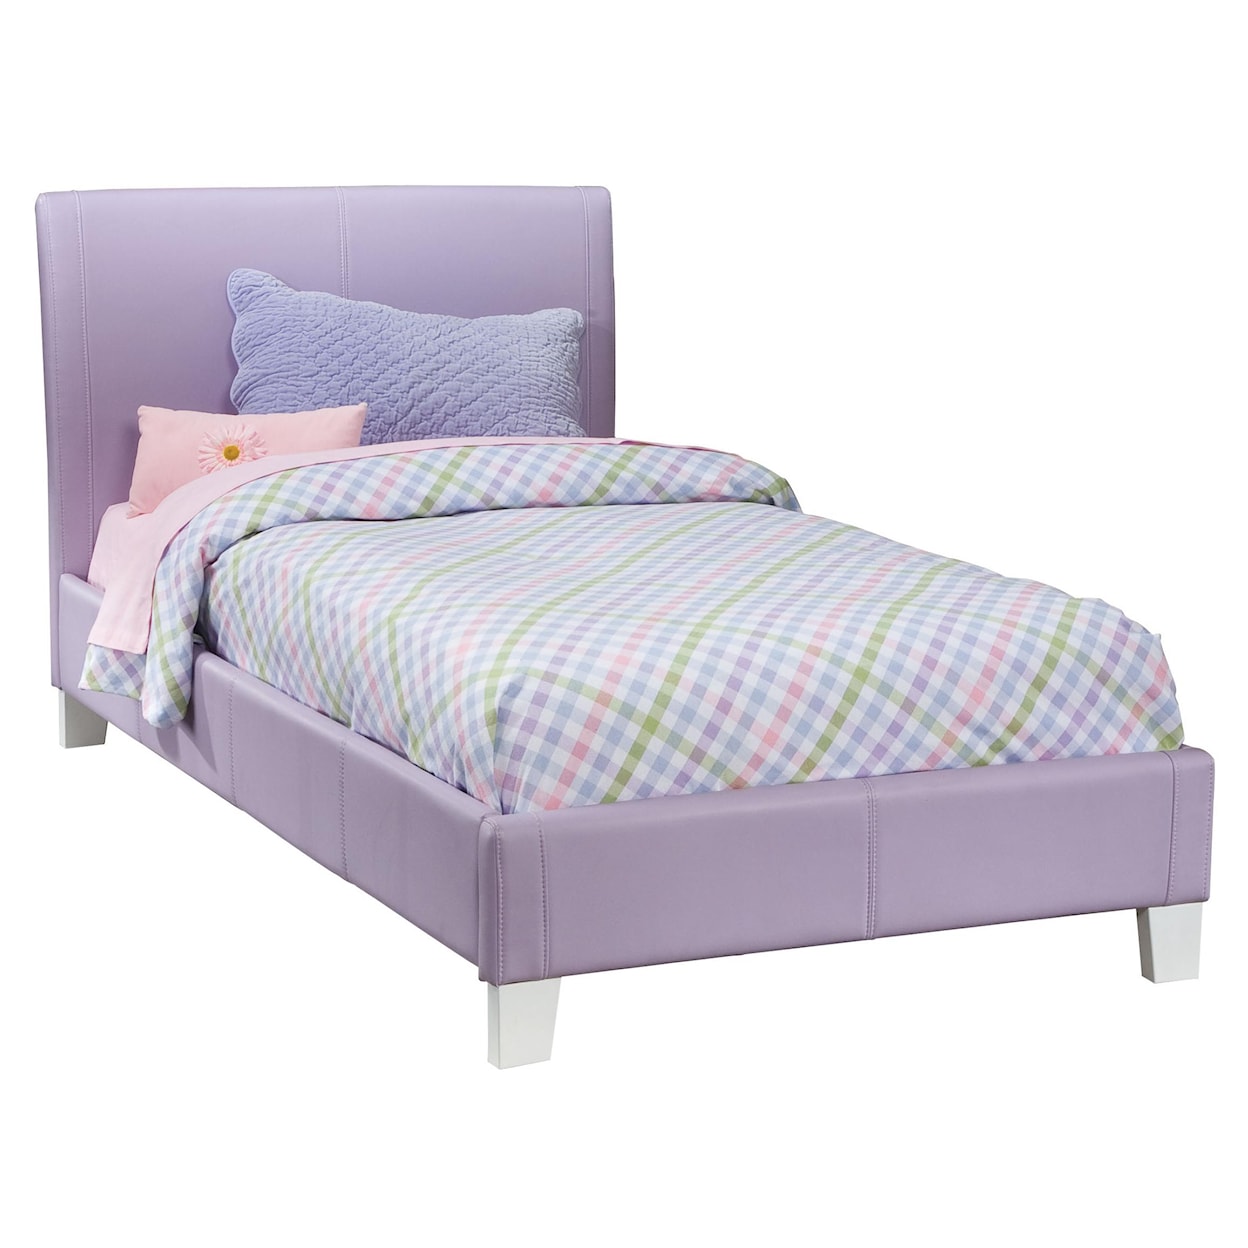 Standard Furniture Fantasia Twin Upholstered Bed